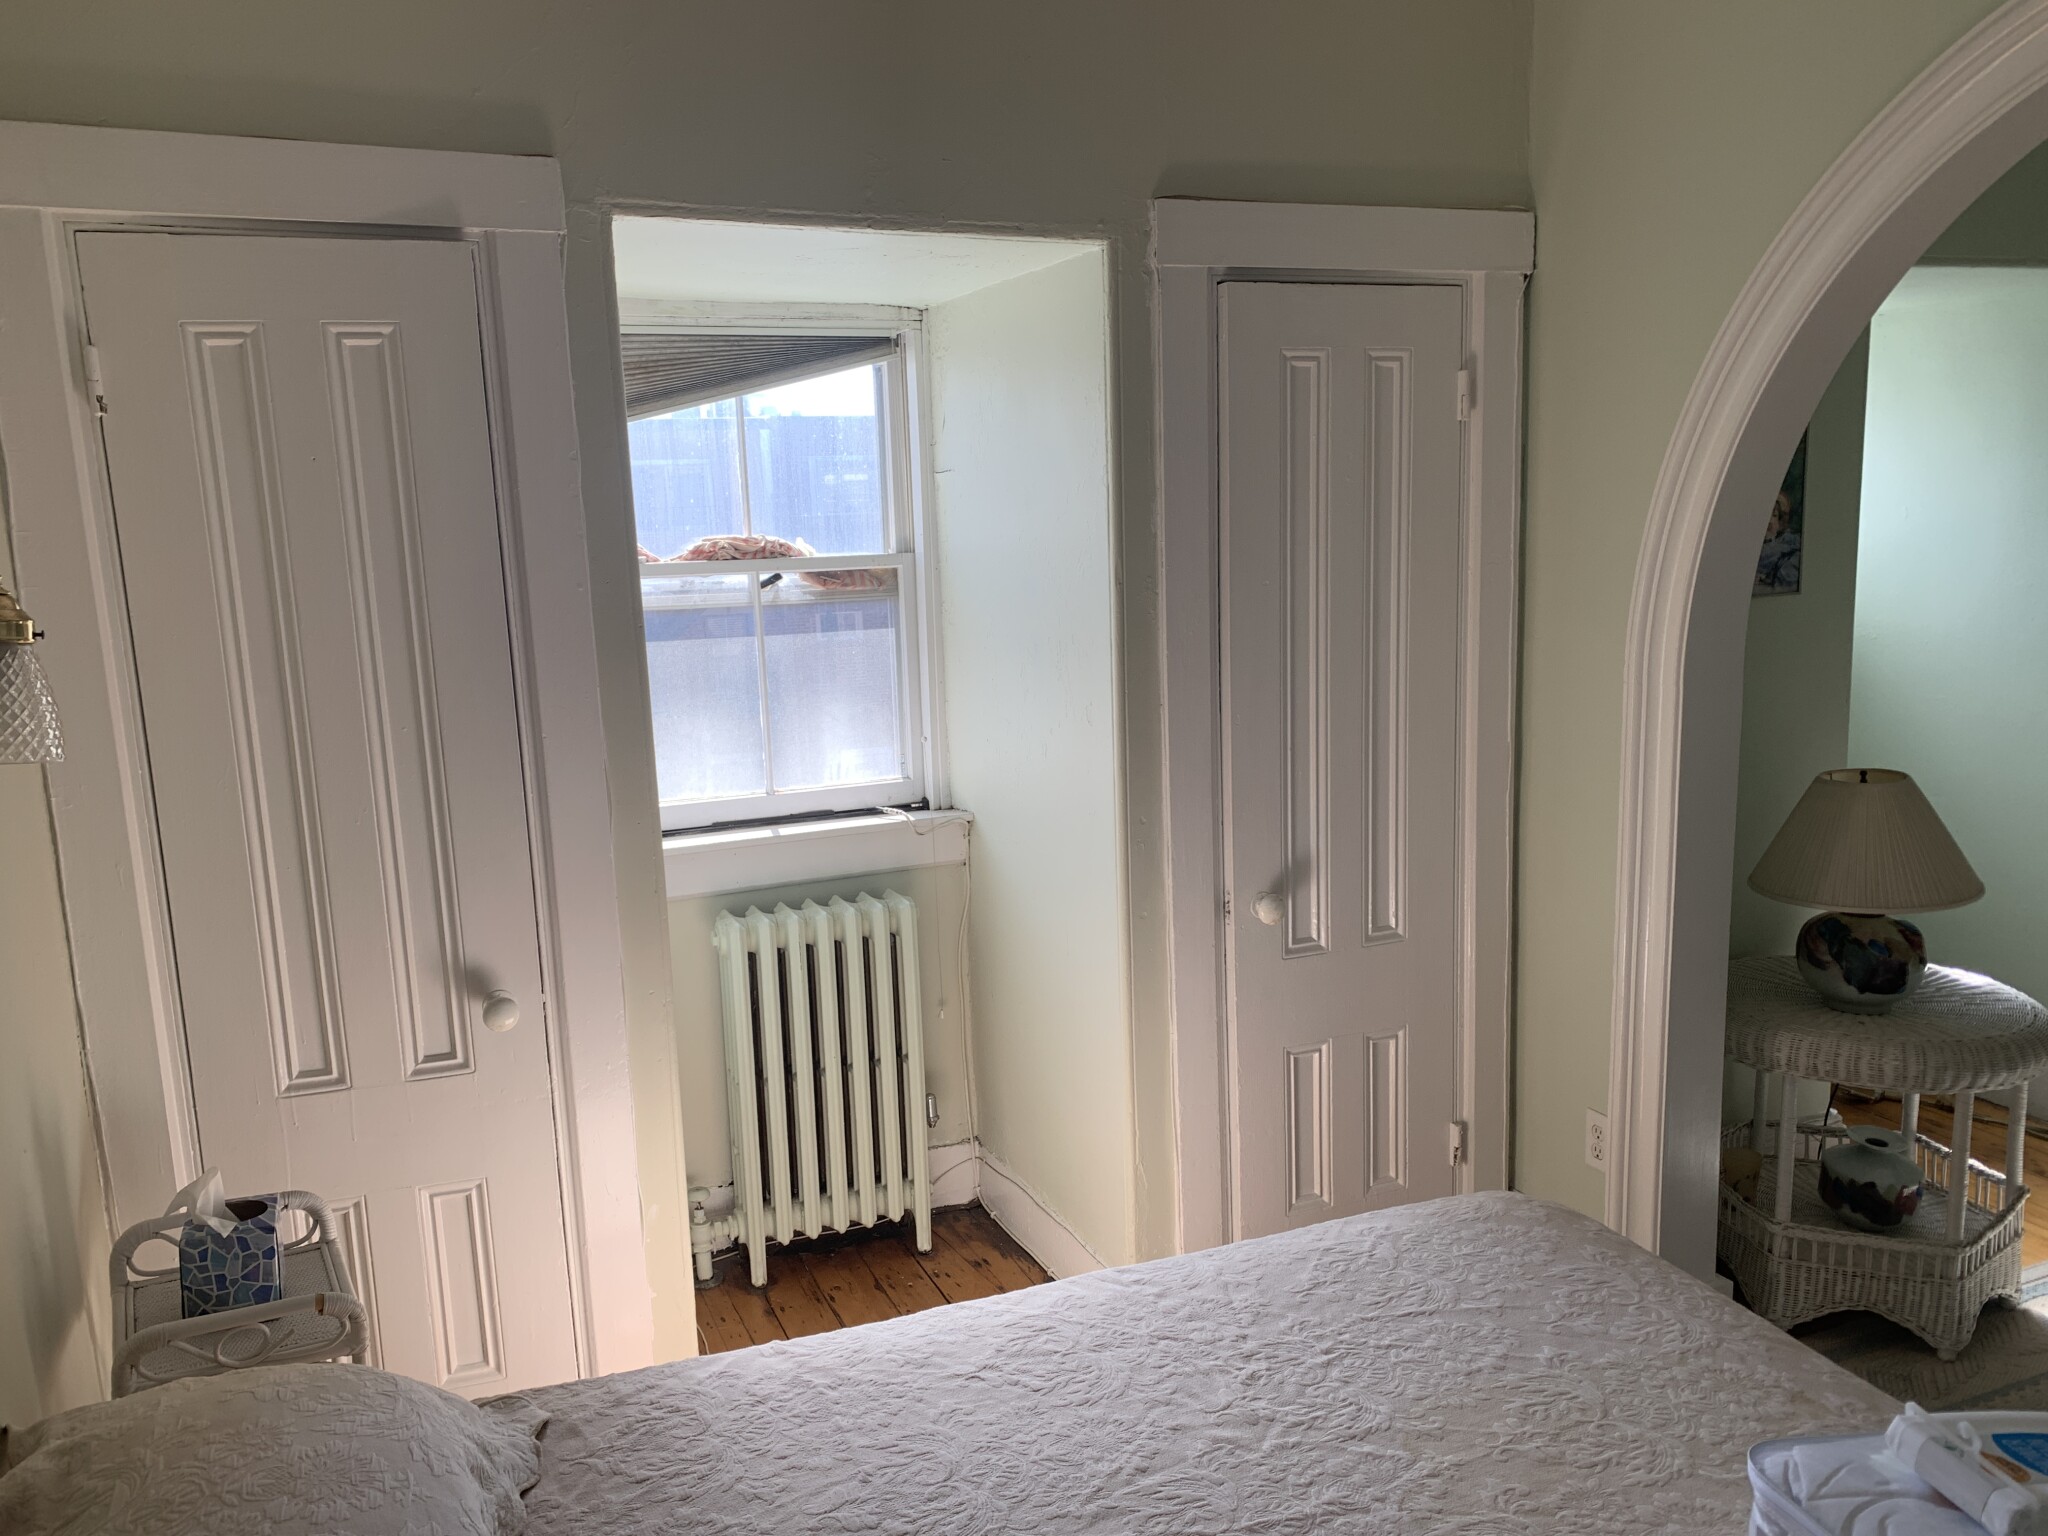 Photos of apartment on Rutland Sq.,Boston MA 02118